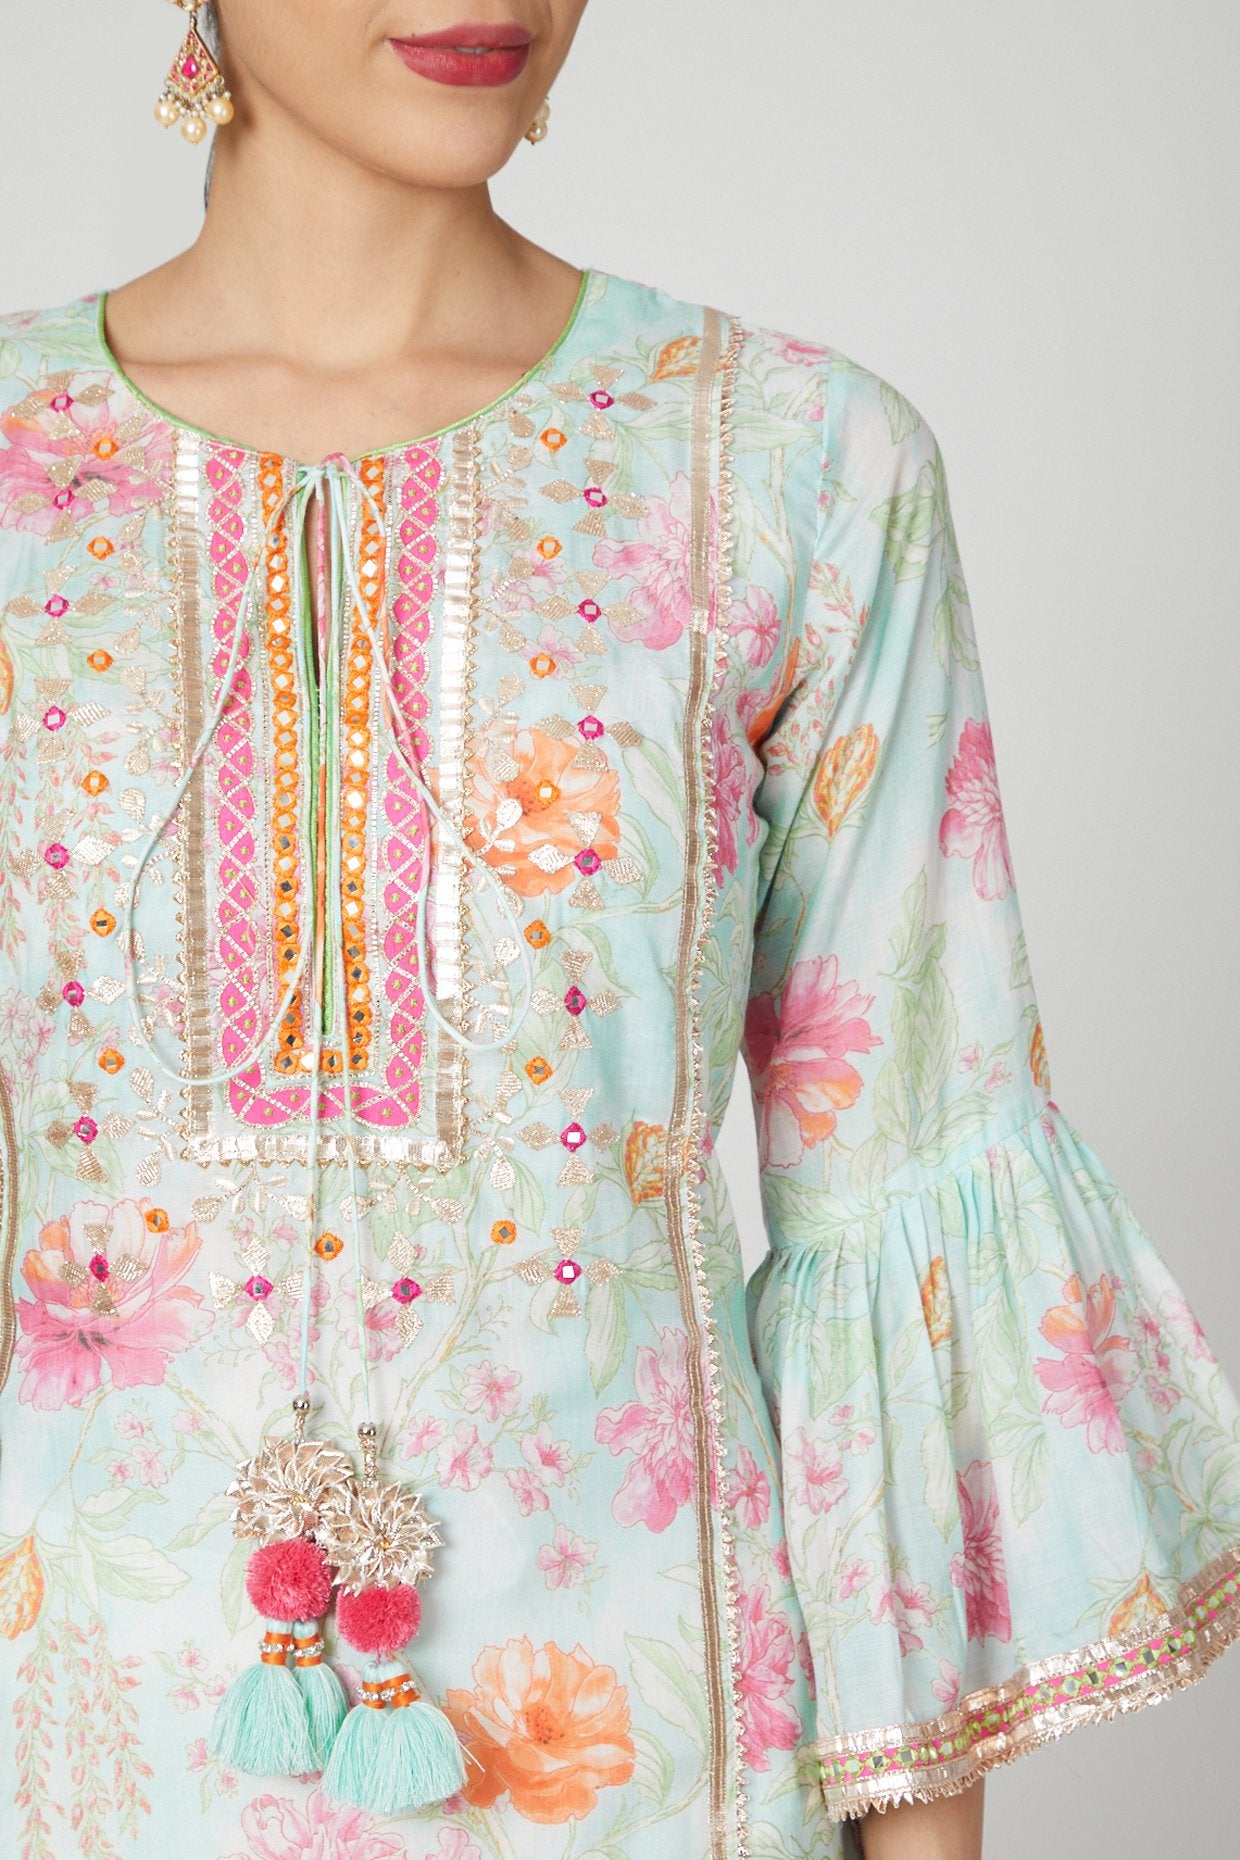 Gopi vaid - Sitara - Utsav Blue Tunic - Indian Designer wear Online Shopping